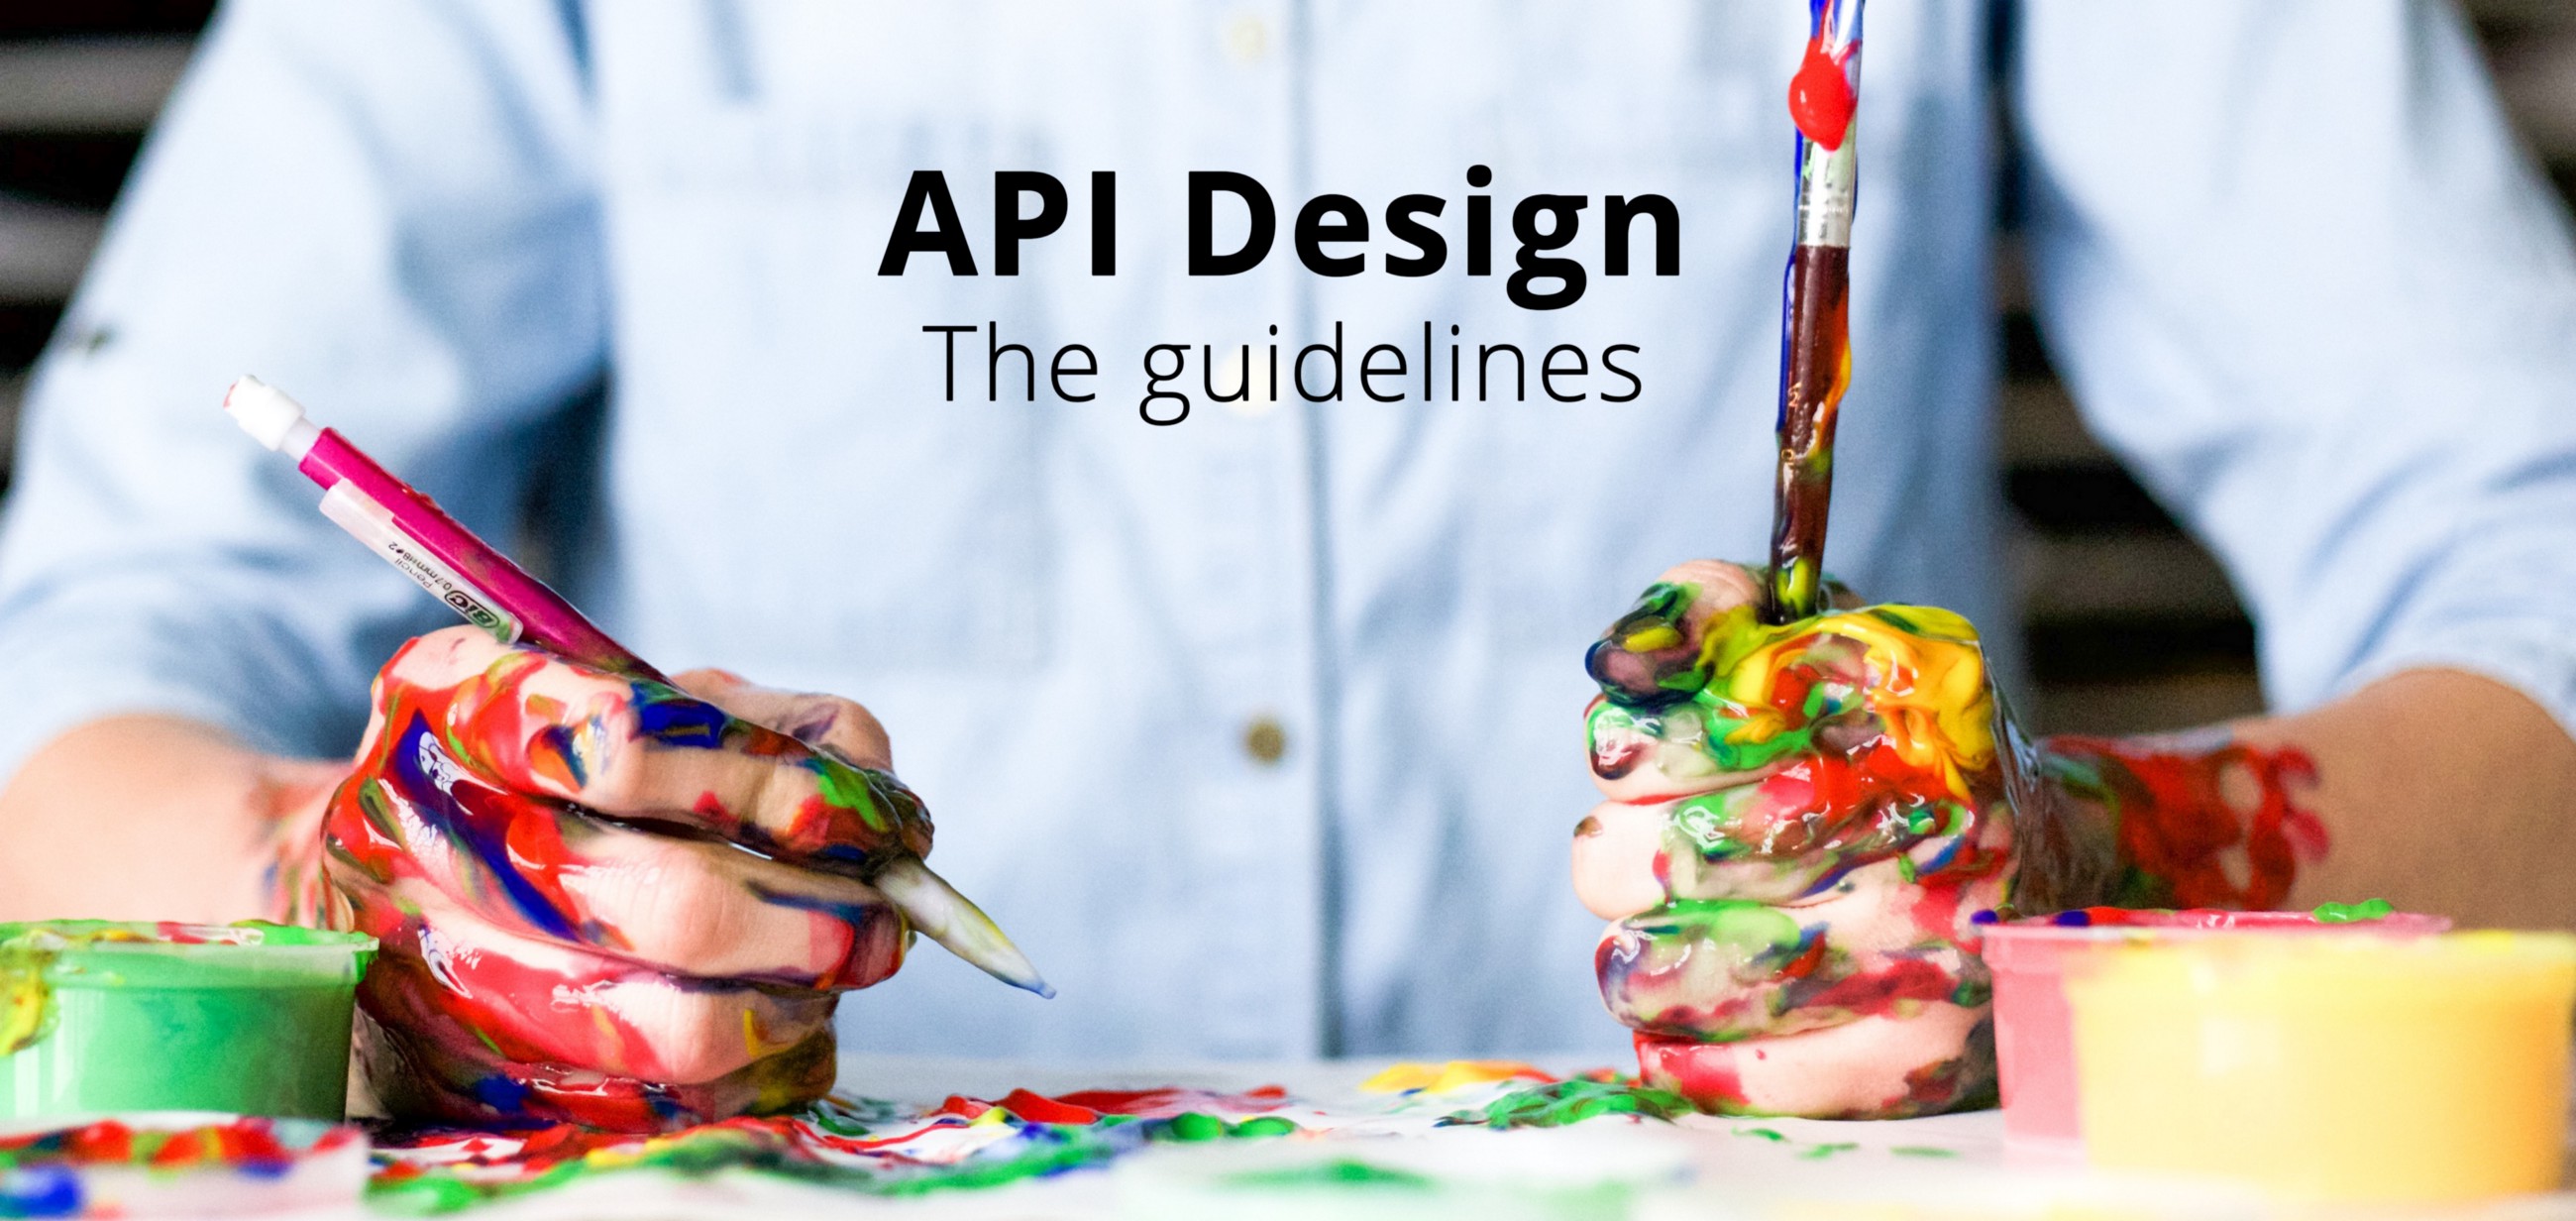 RESTful API Designing guidelines — The best practices